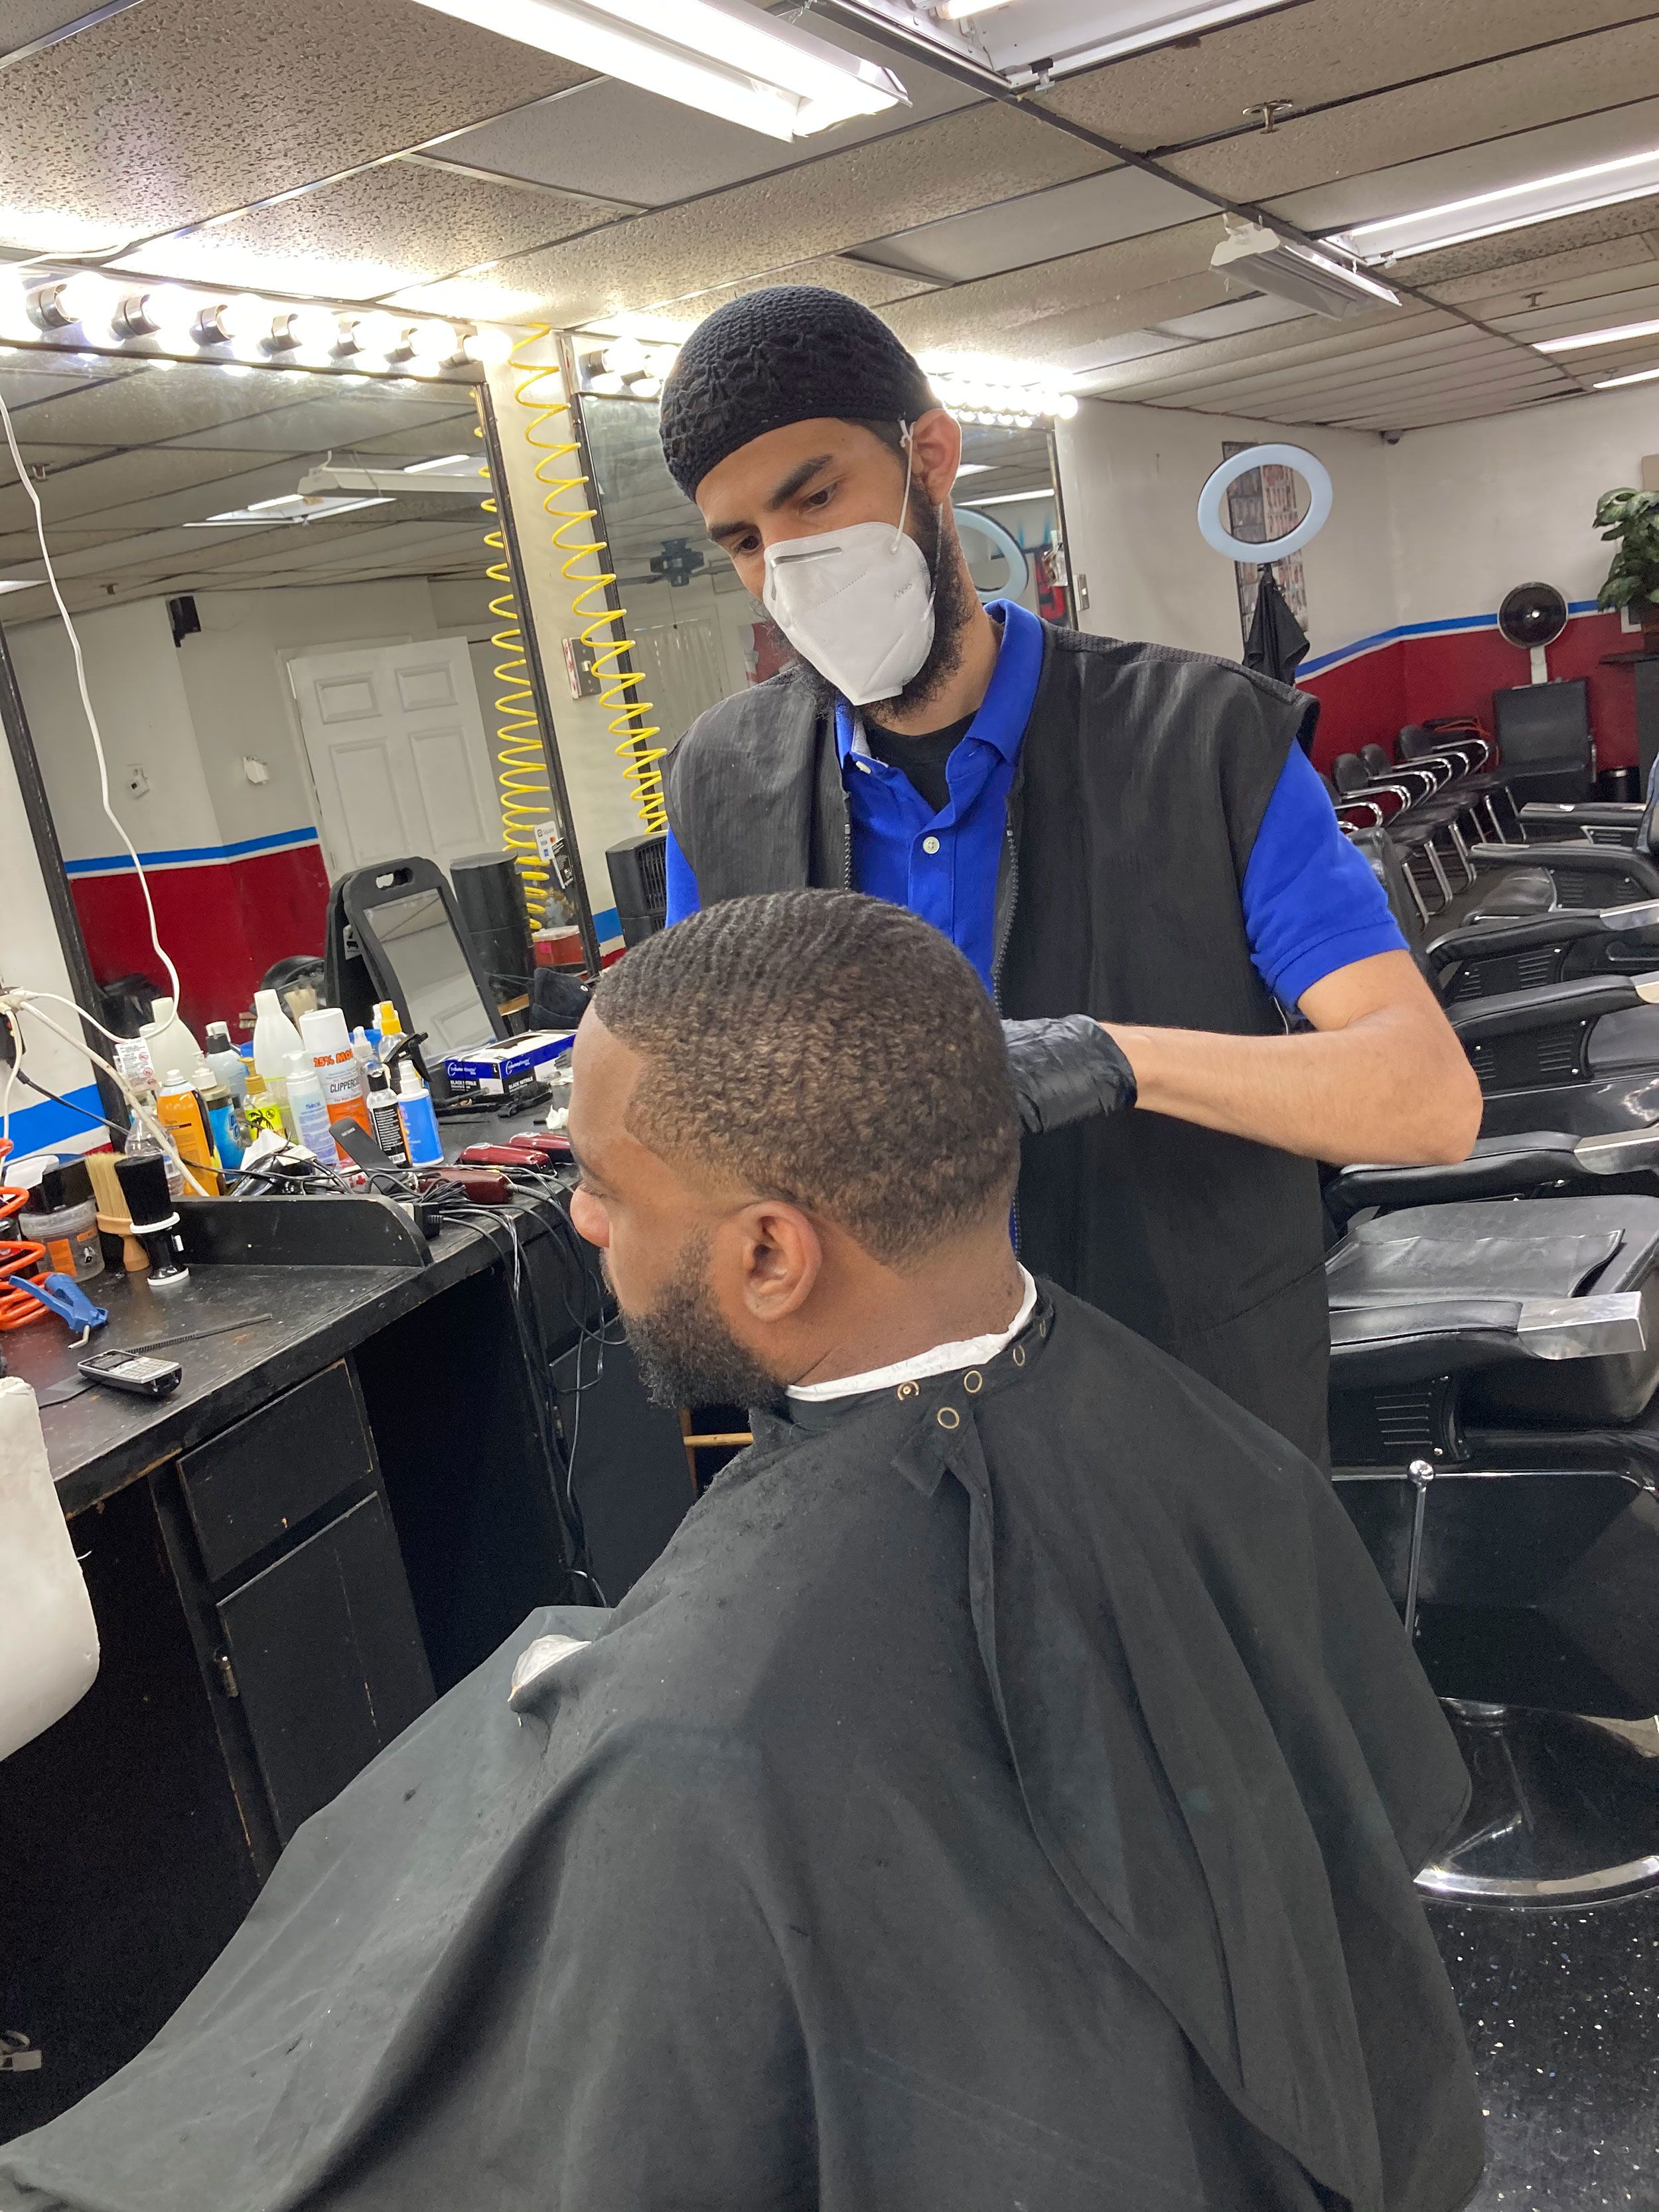 Coronavirus summary  May 26: Barber shops, hair salons get OK to